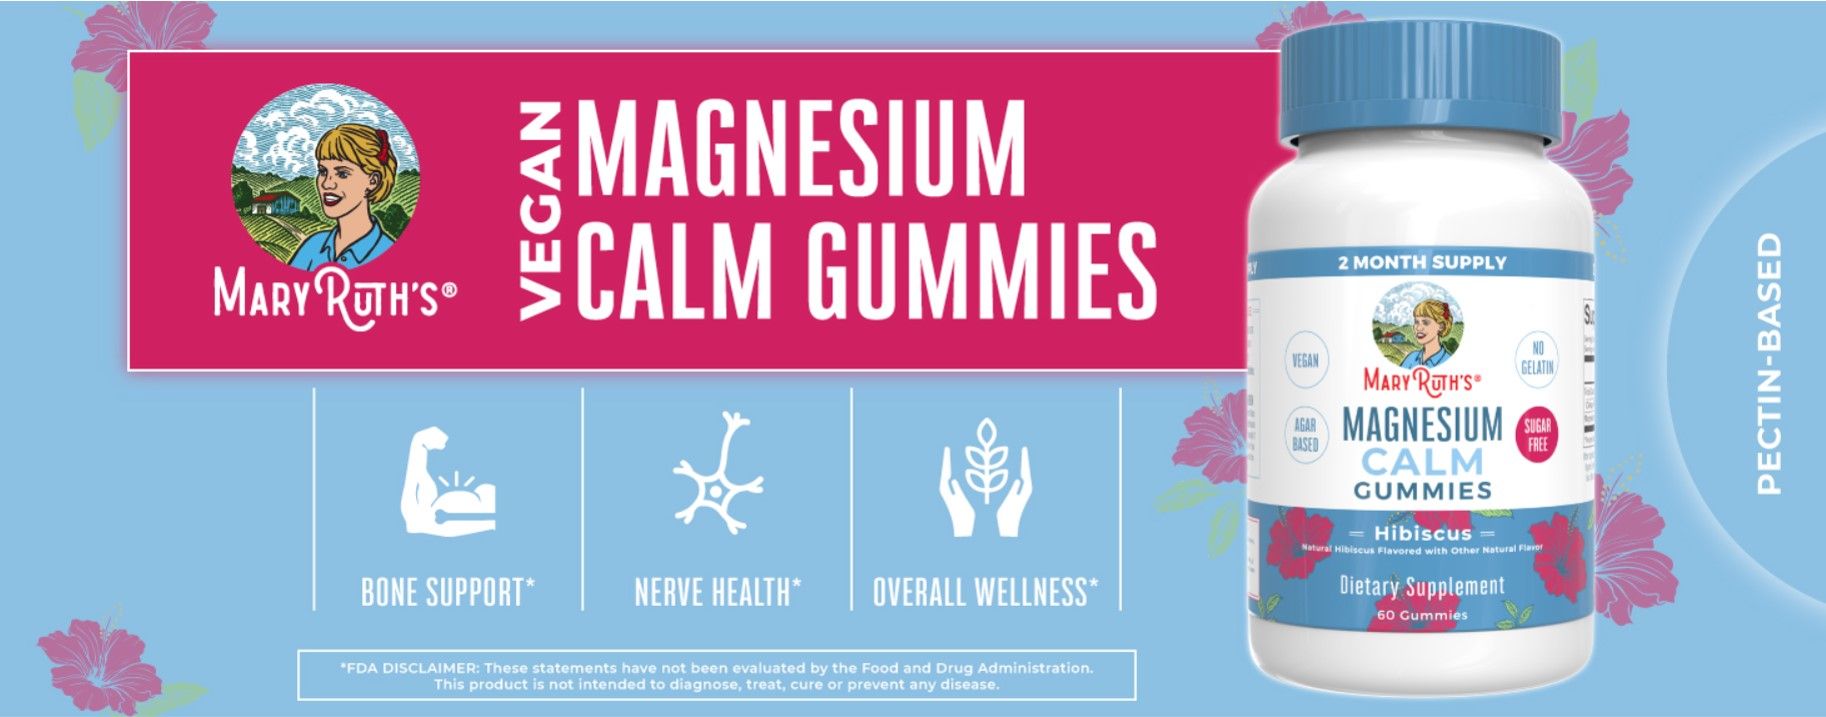 Mary Ruth Organics Vegan Magnesium CALM Gummies sold on Amazon